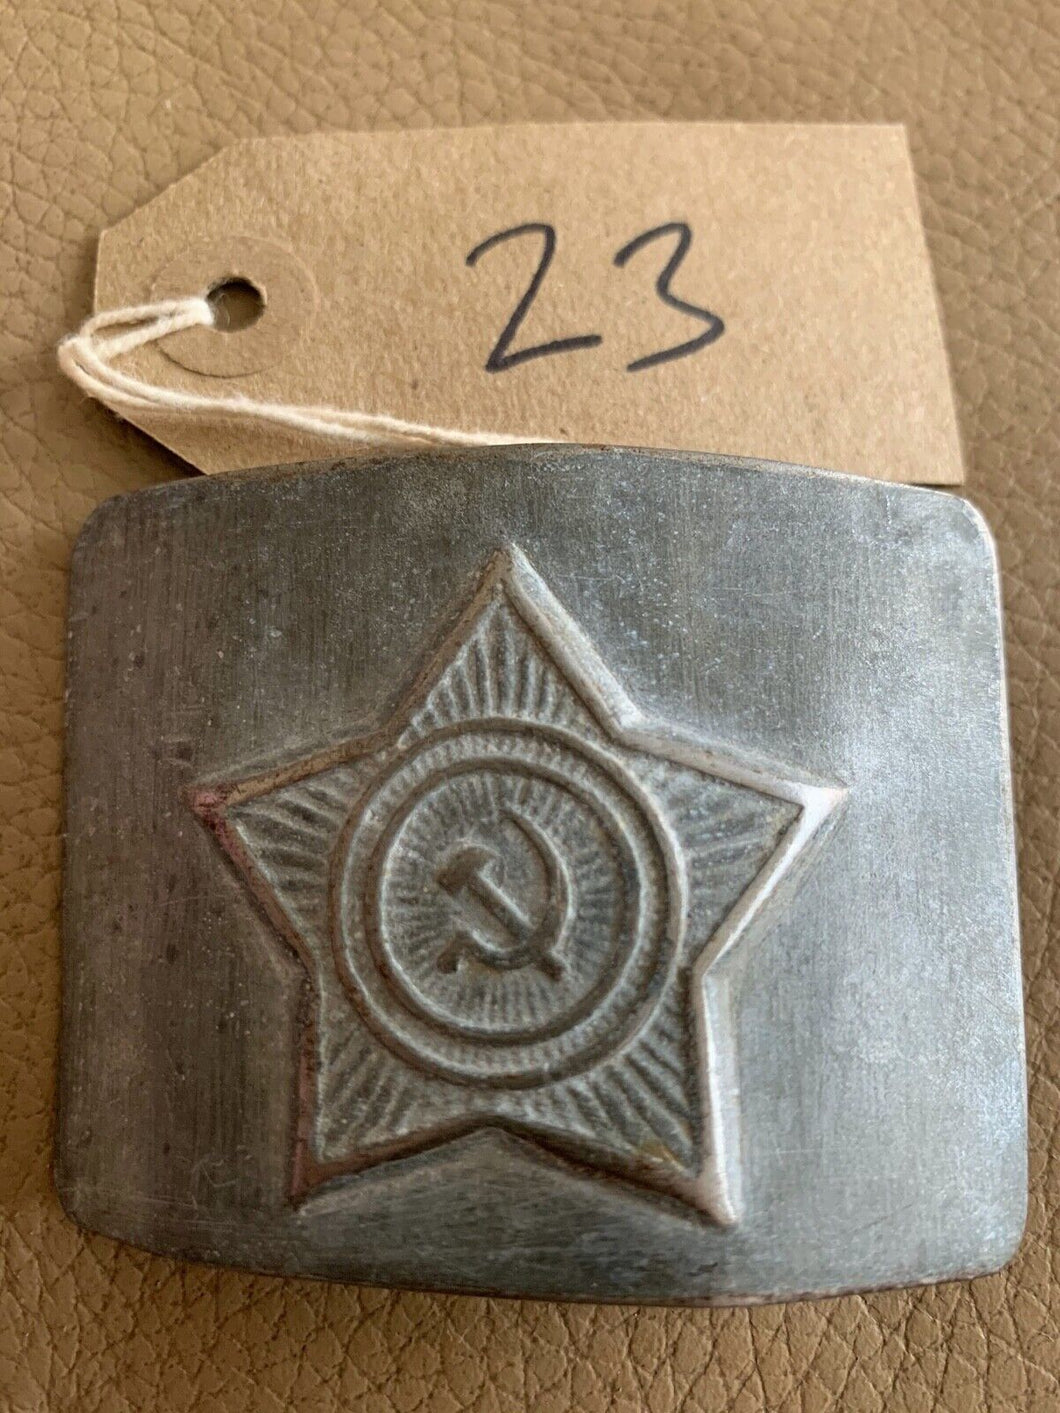 Genuine WW2 USSR Russian Soldiers Army Brass Chromed Belt Buckle - #23